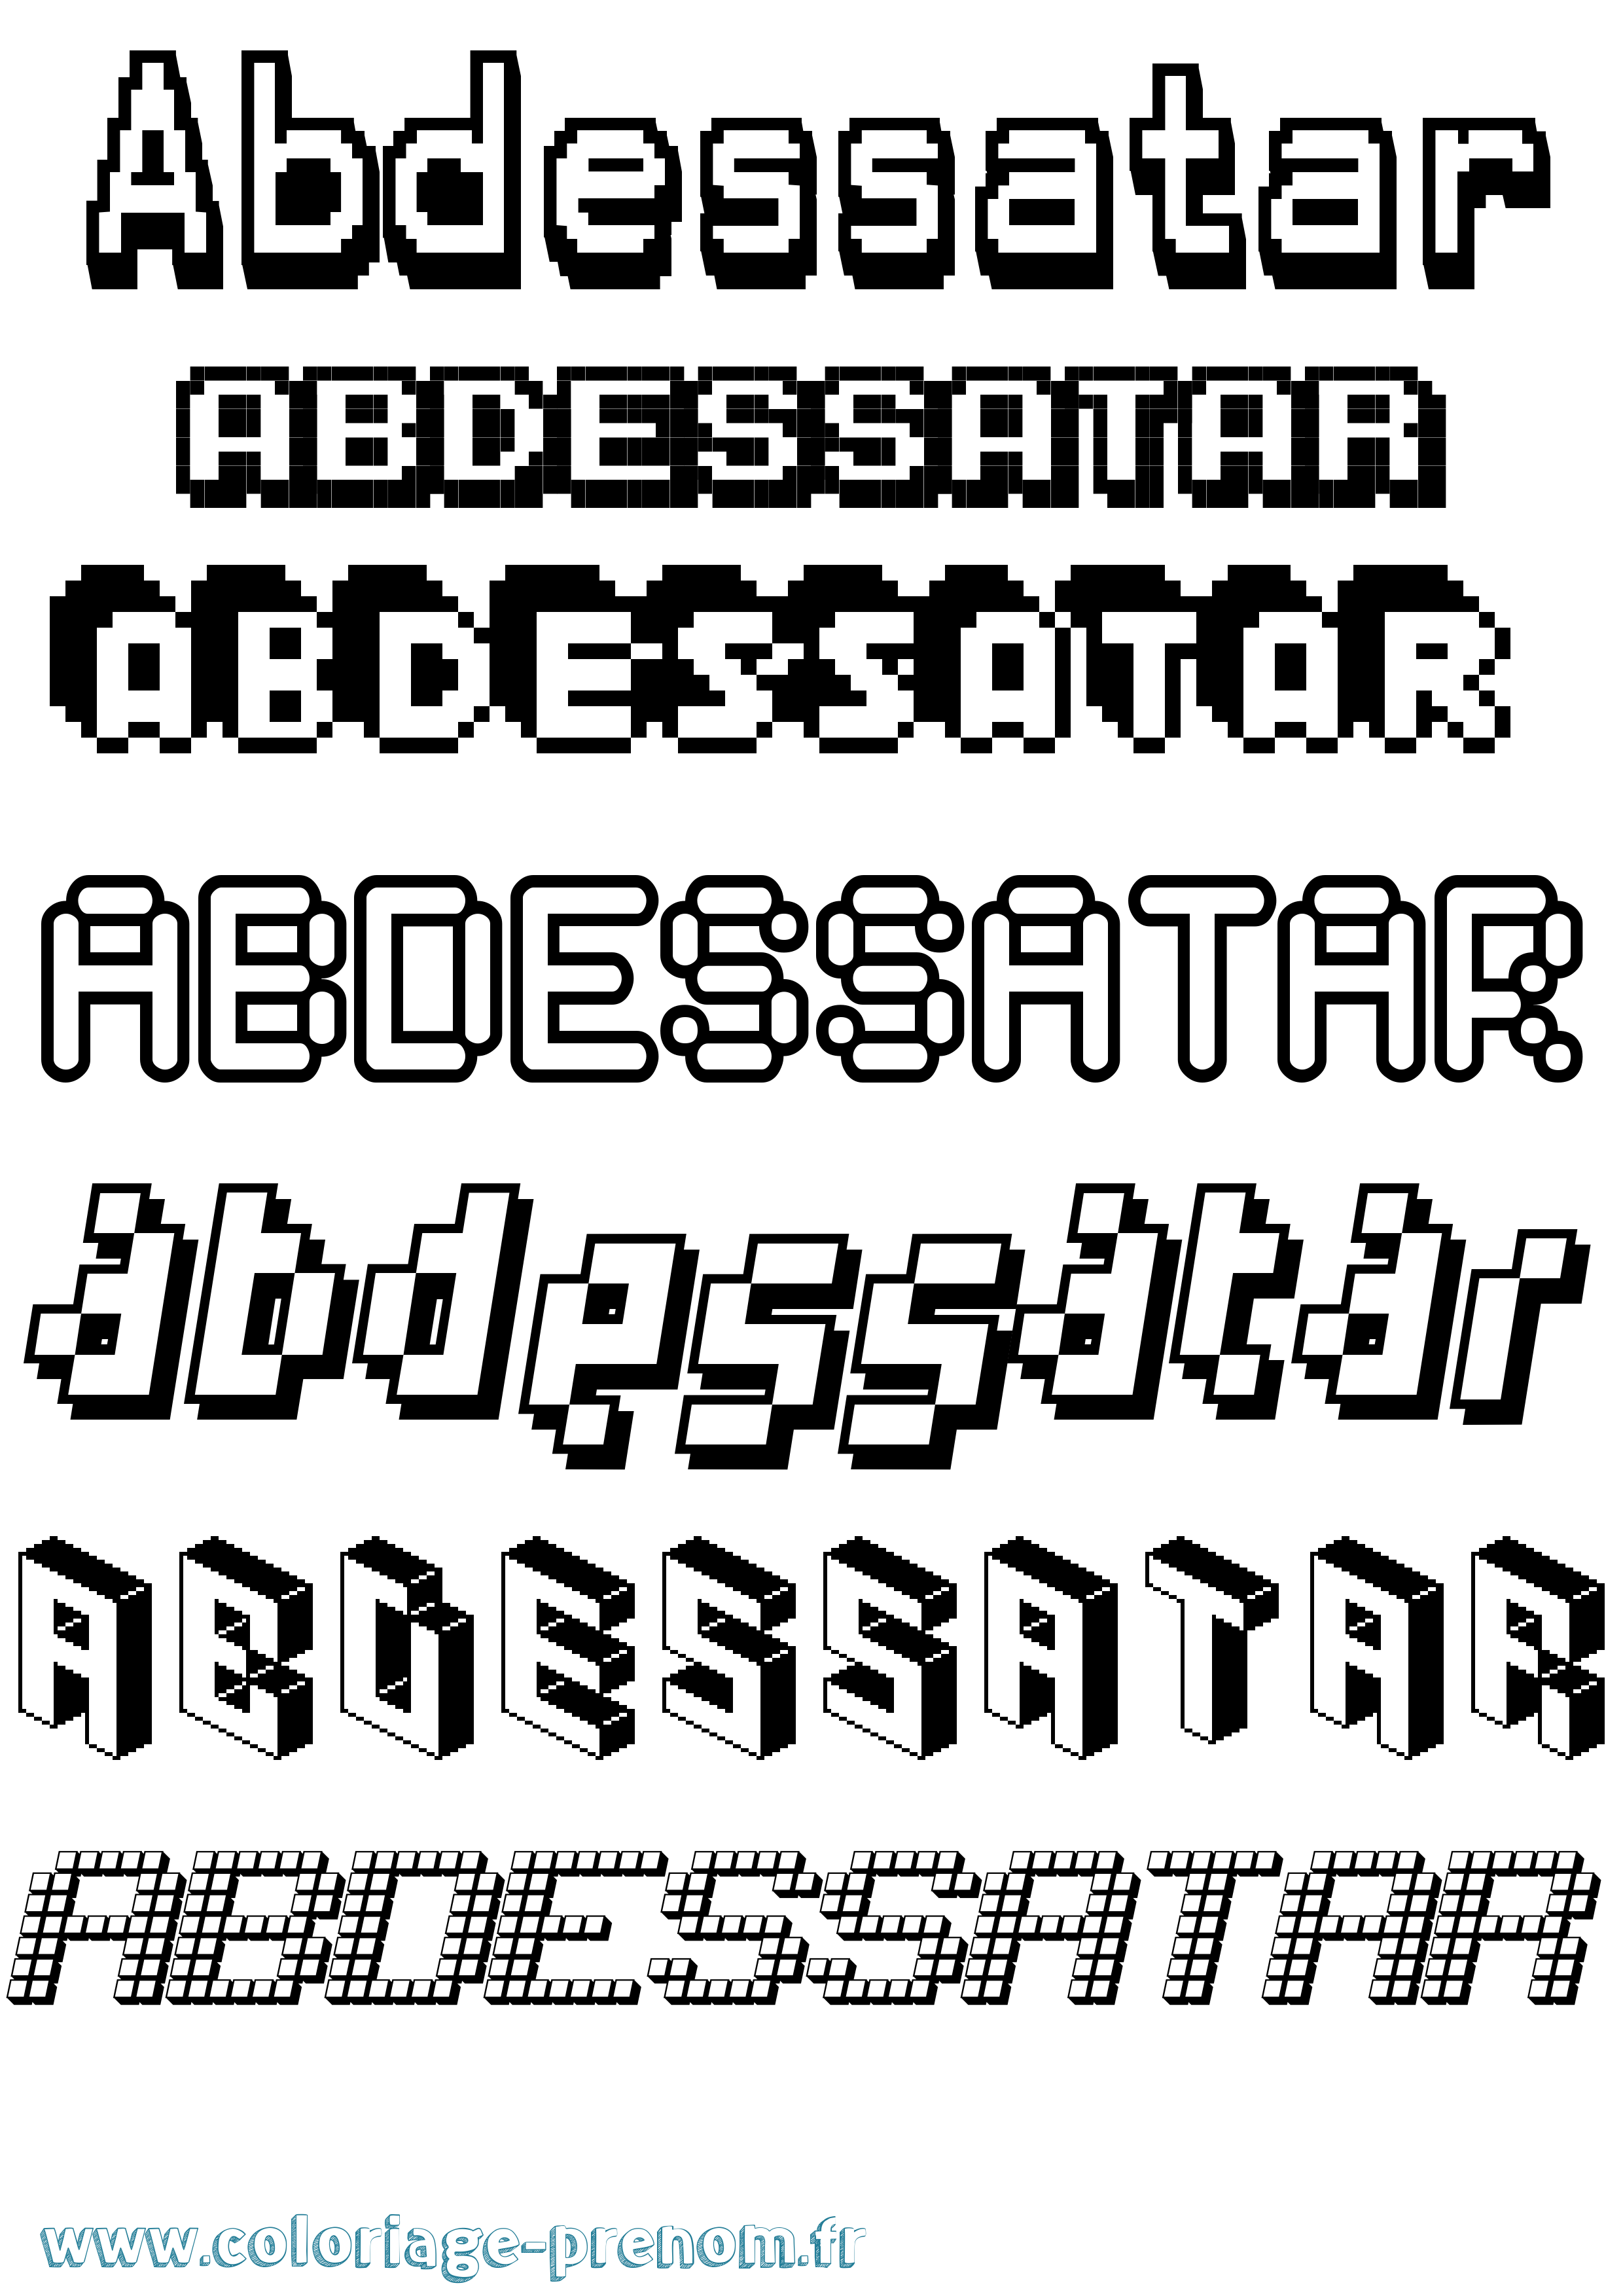 Coloriage prénom Abdessatar Pixel